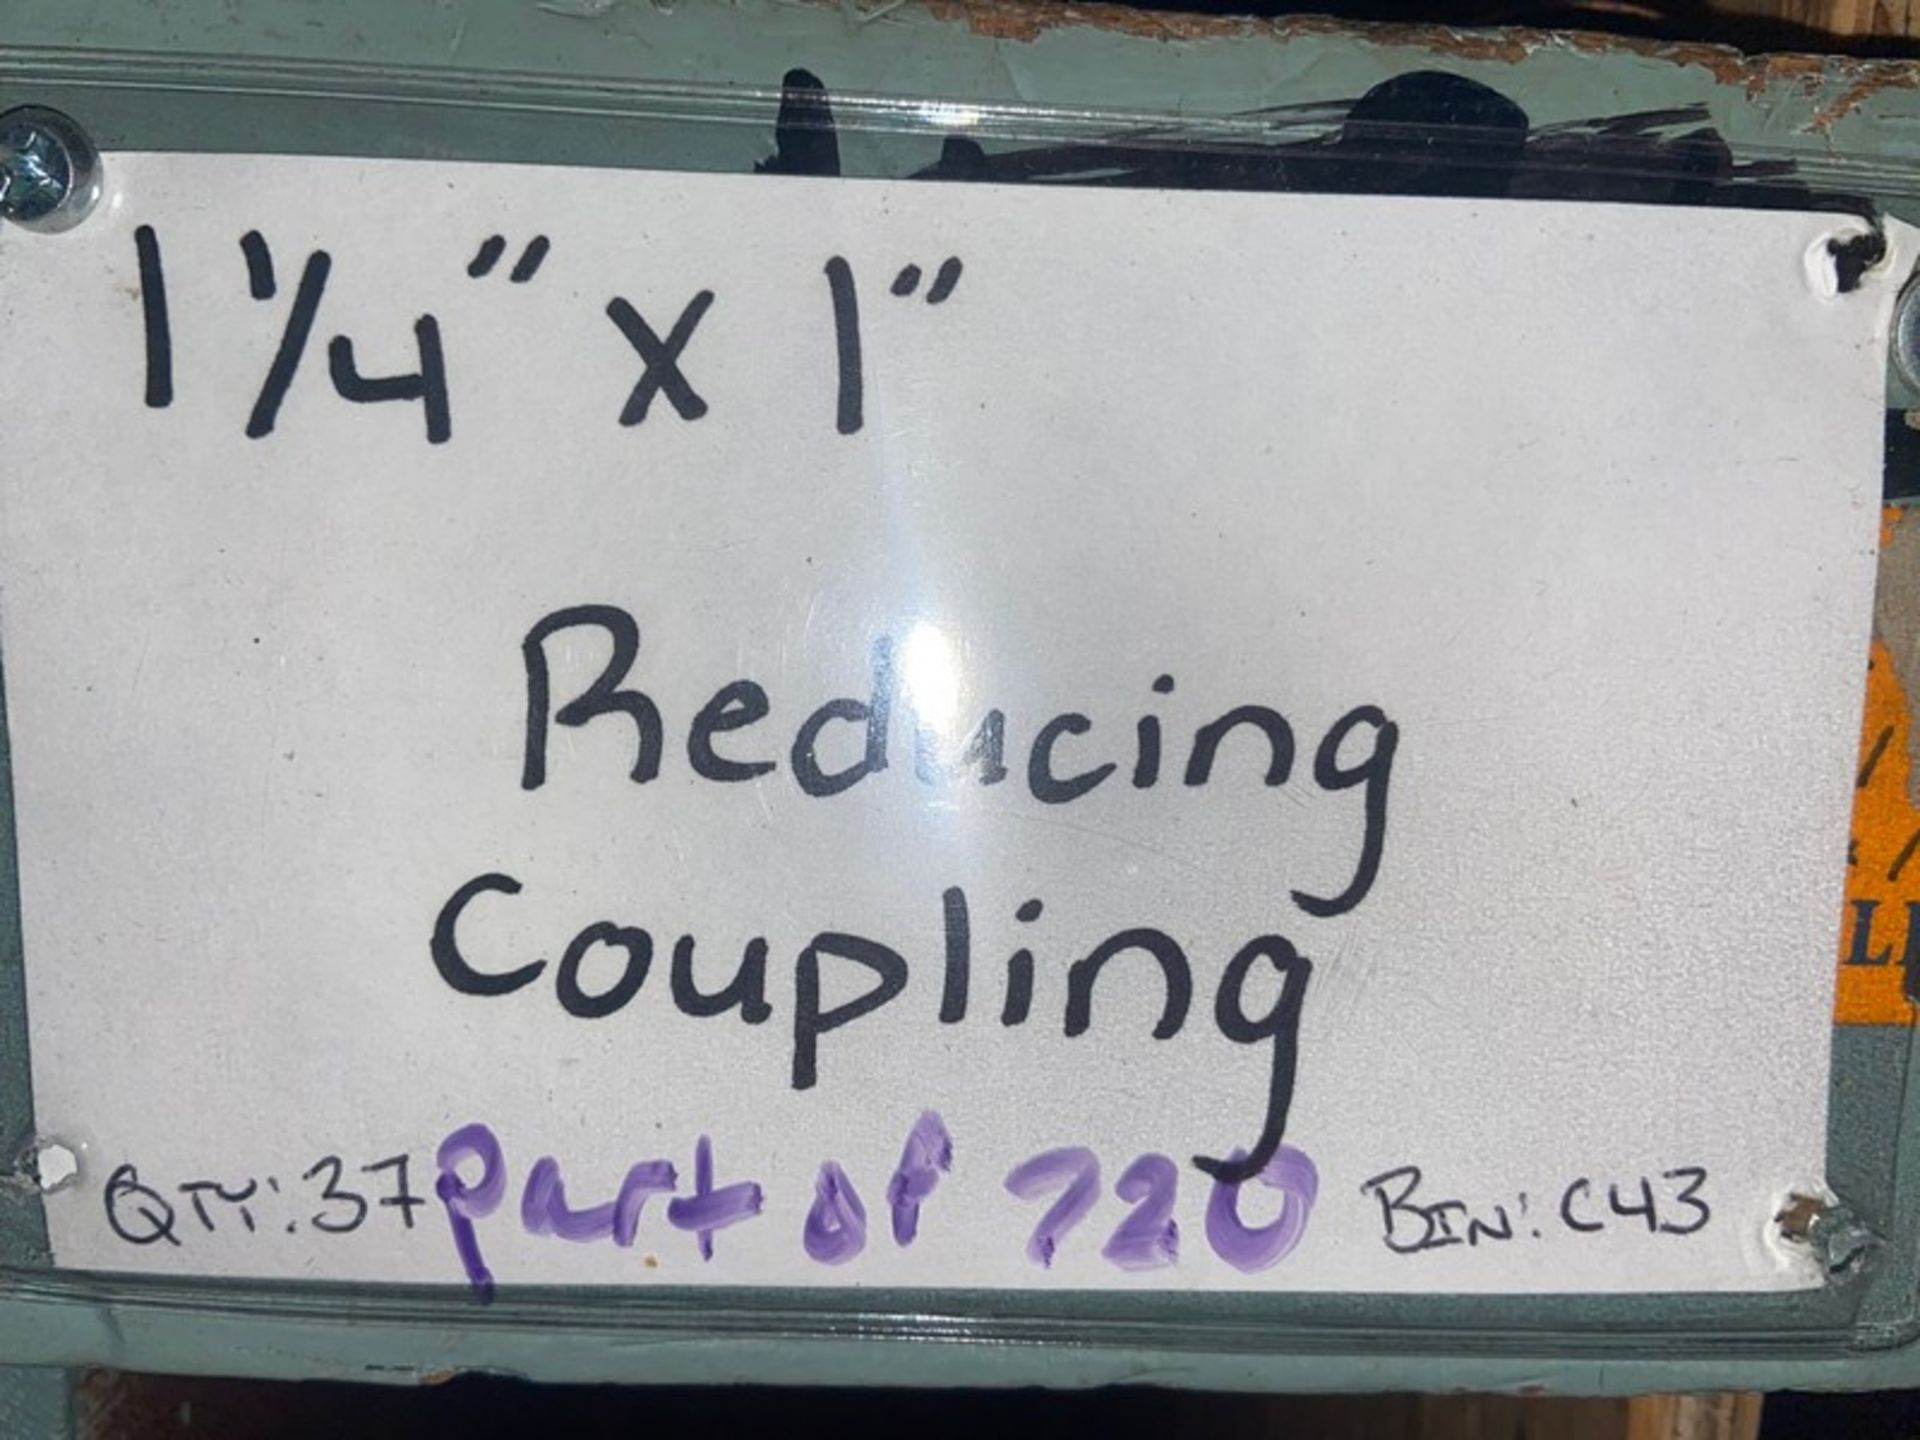 (3)1 1/2” x 1/2” Reducing Coupling(Bin:C44); (37)1 1/4” x 1 Reducing coupling (Bin:C43) (LOCATED - Image 4 of 4